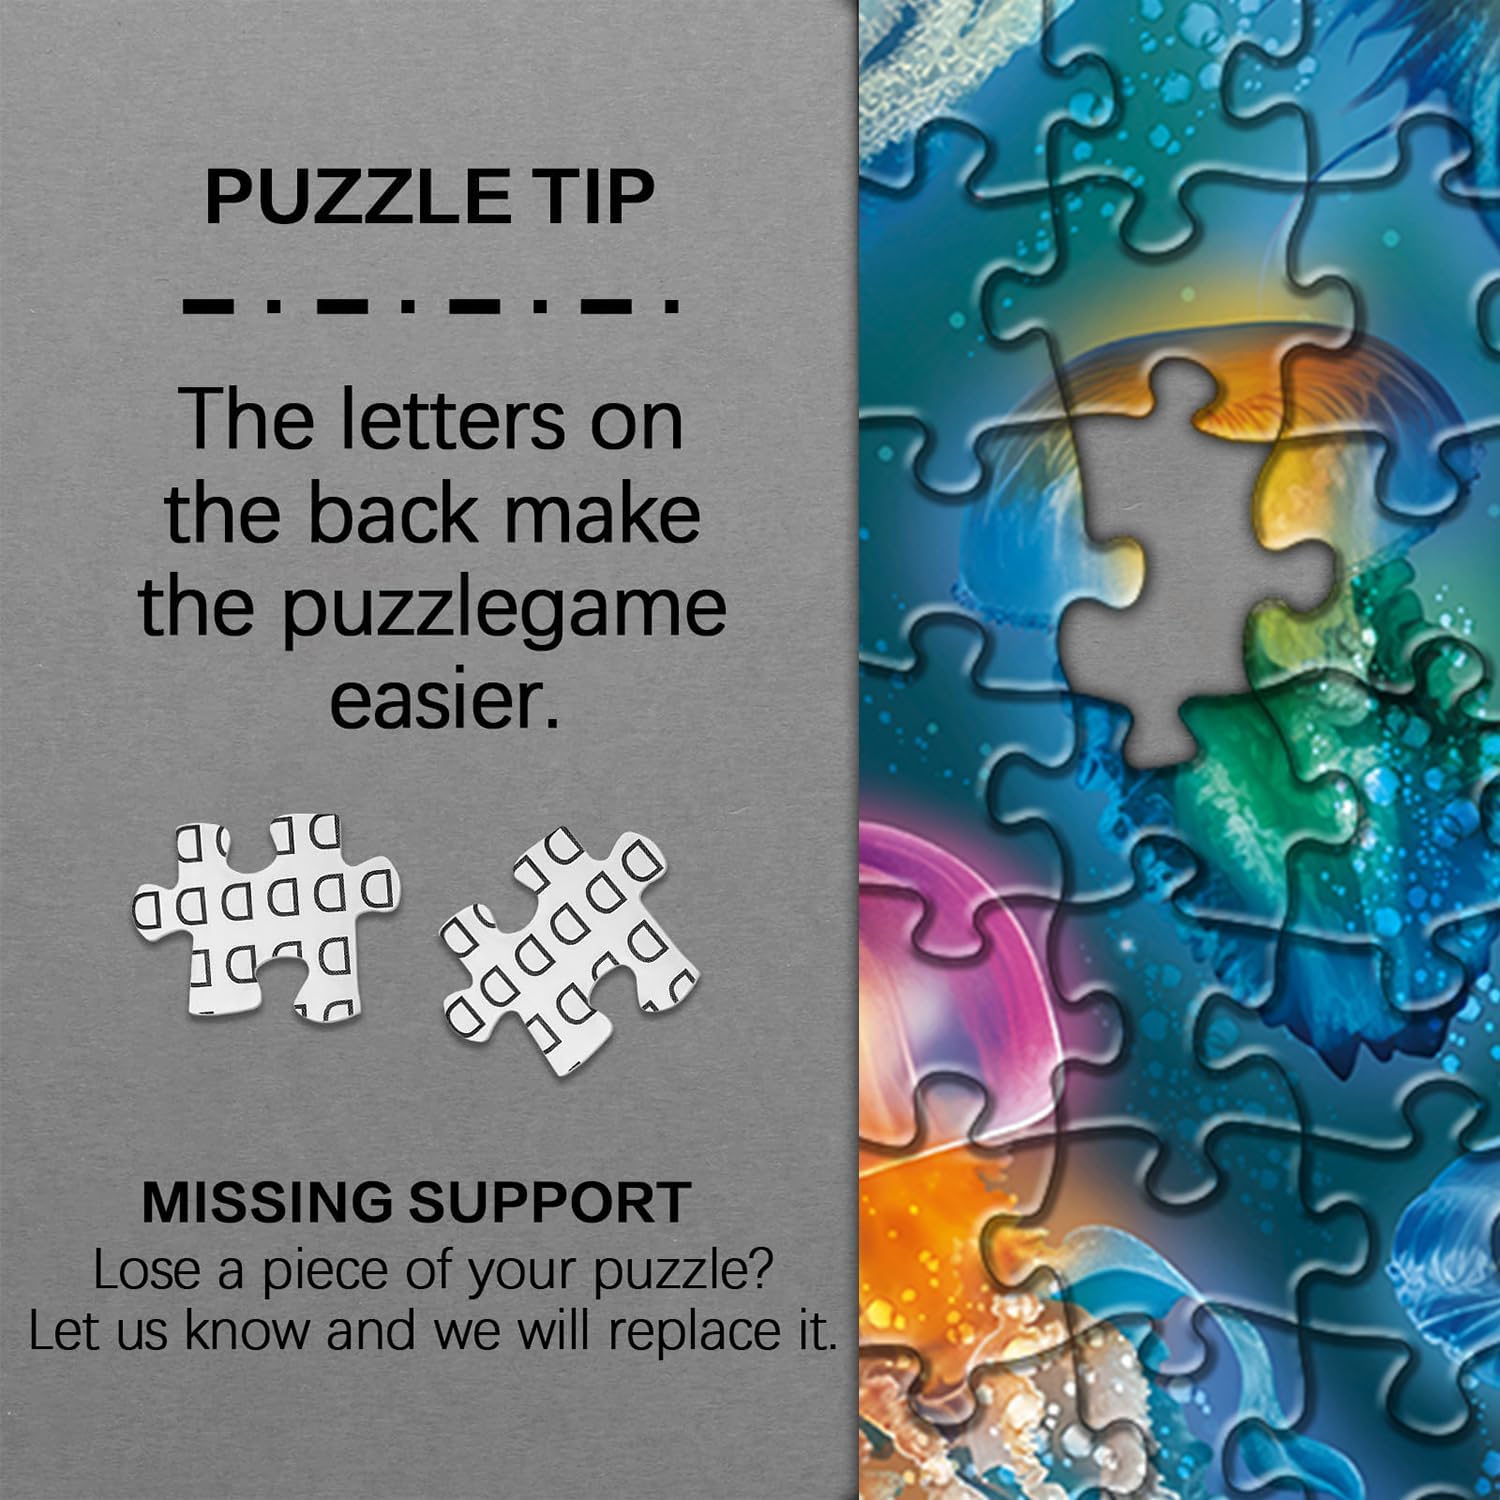 Magical Jellyfish Jigsaw Puzzle 1000 Piece